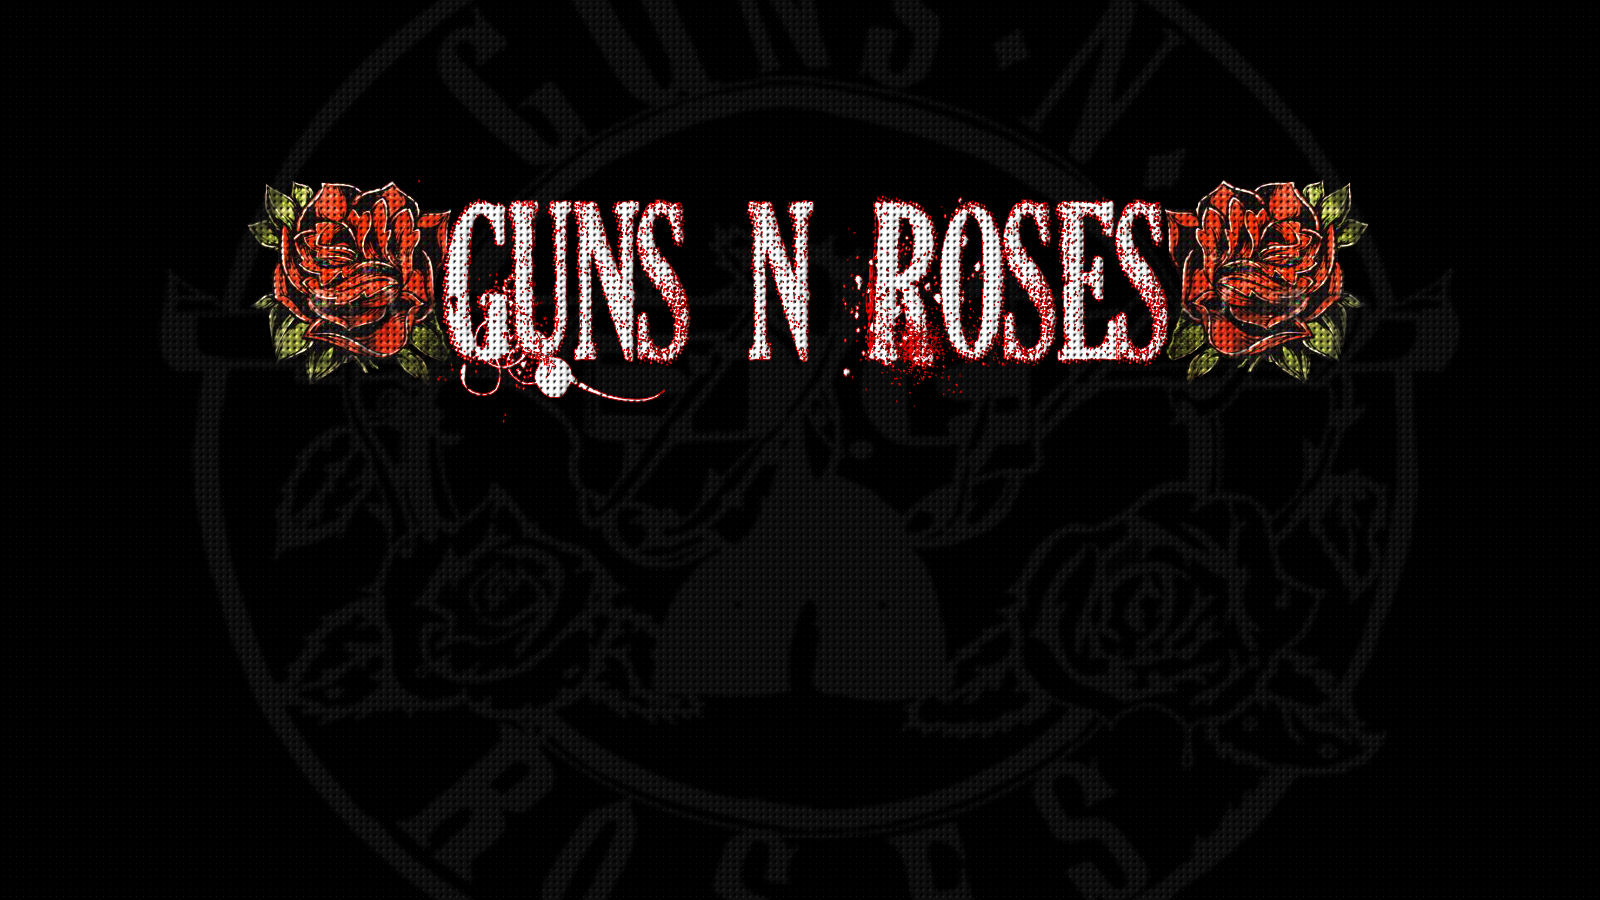 Guns N' Roses logo by VRocketQueen on DeviantArt